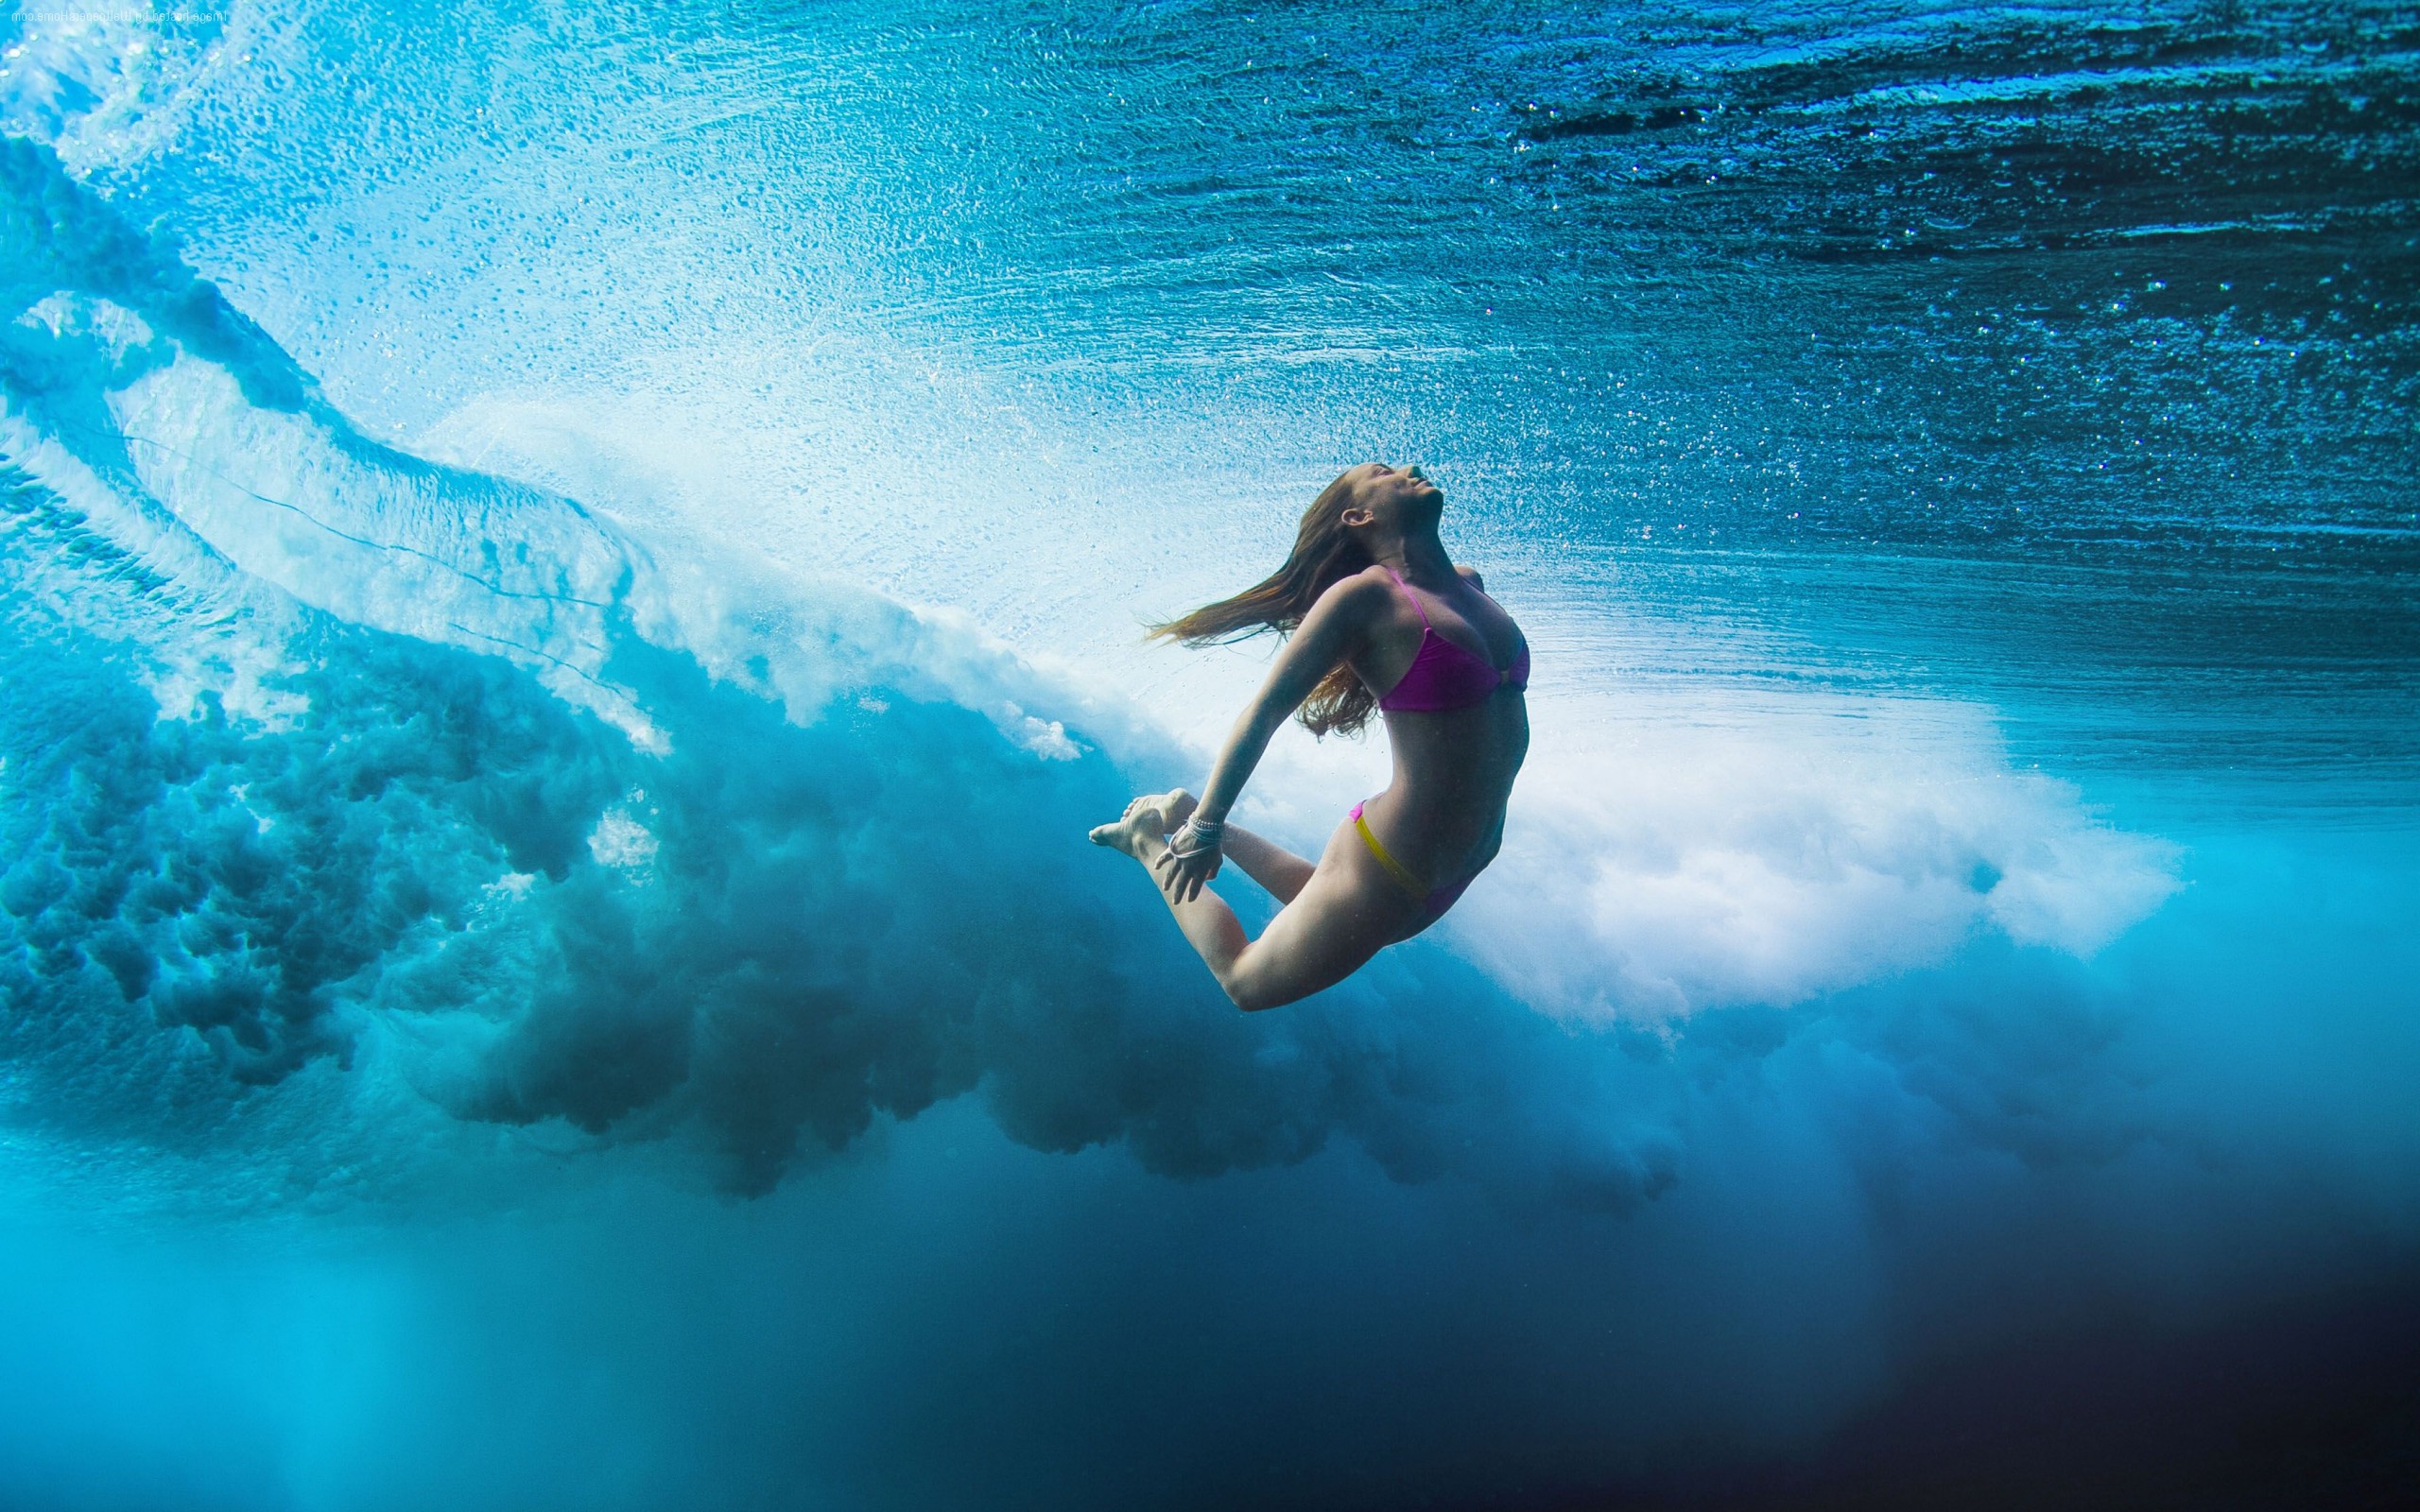 Surfing Girl Underwater Hd Images